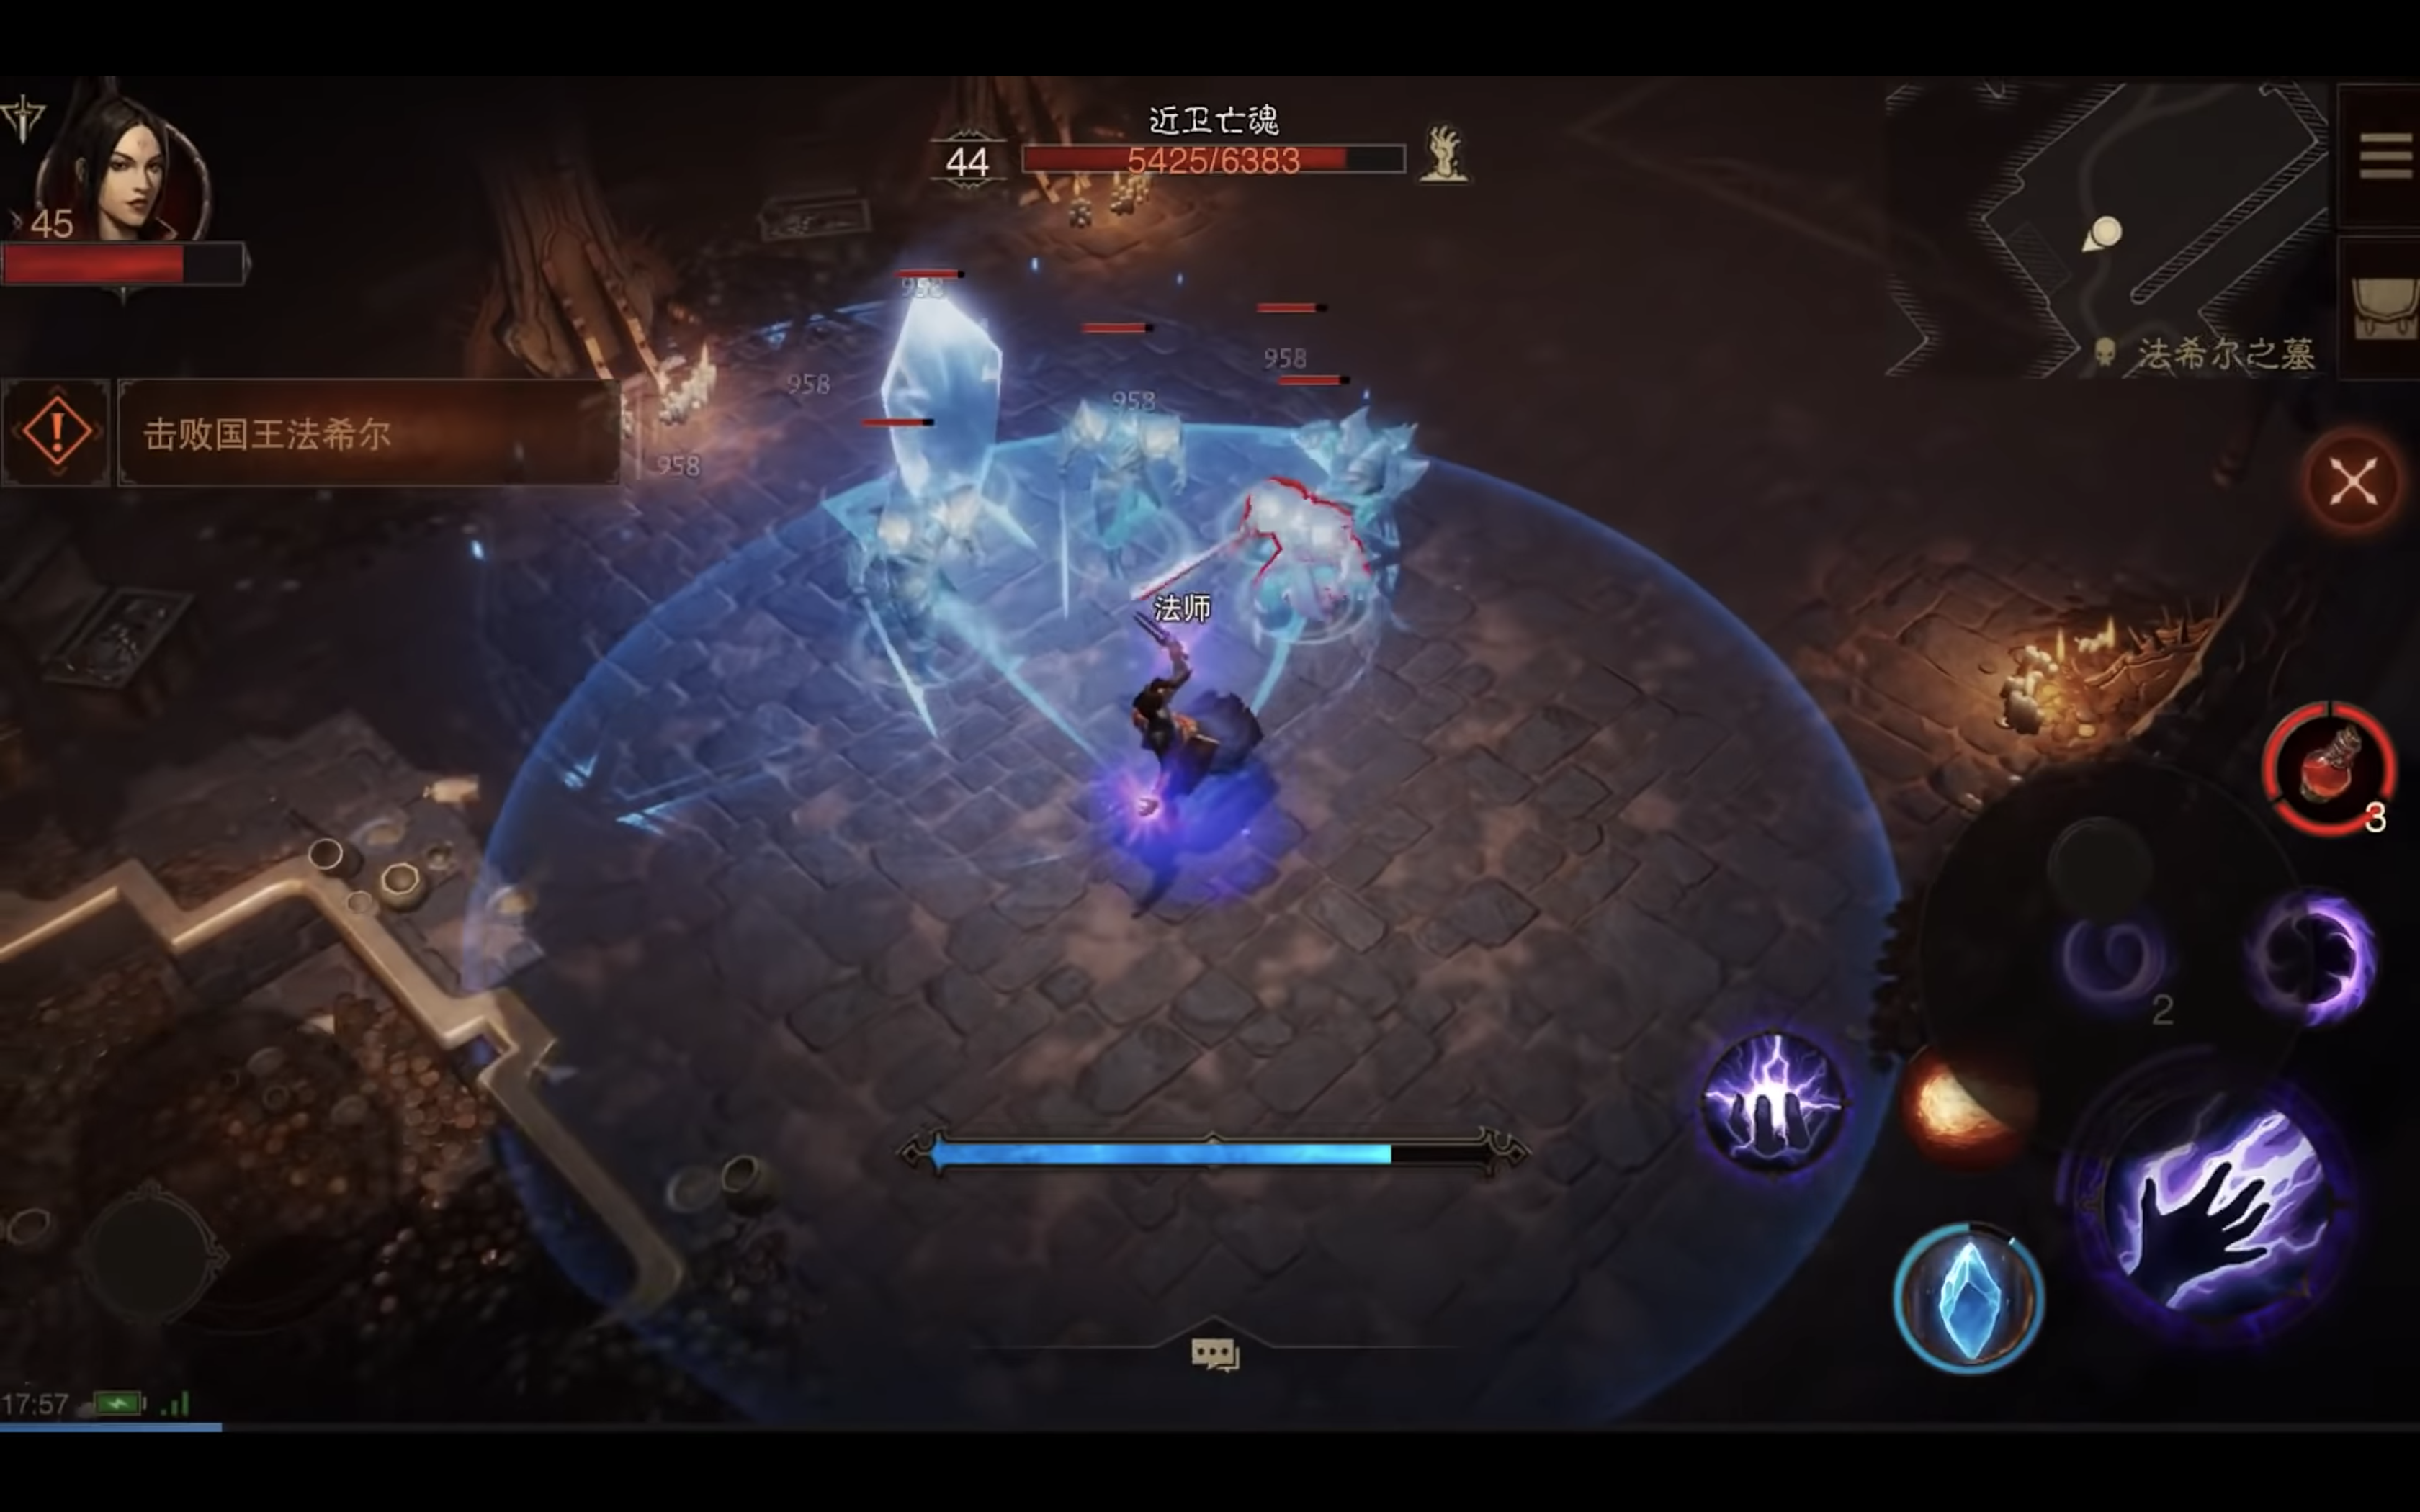 Diablo Immortal  Official Gameplay Trailer 